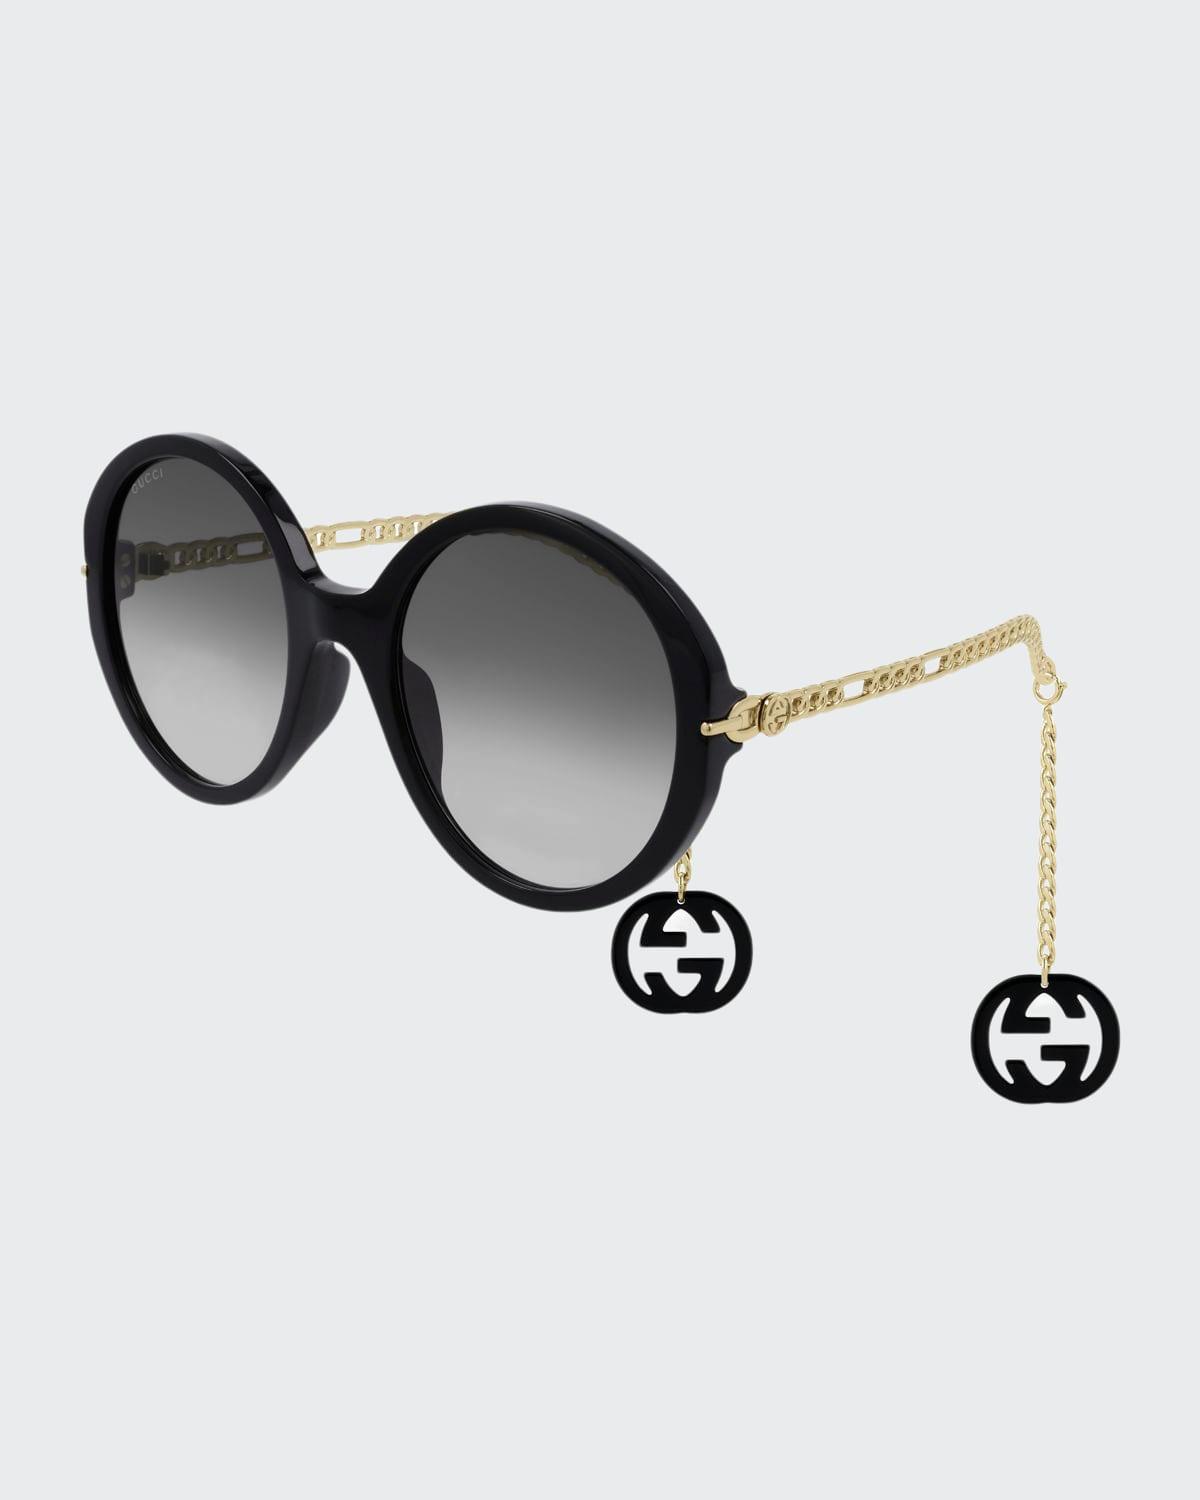 Gucci Round Acetate Sunglasses W Chain Arms In Metallic Lyst